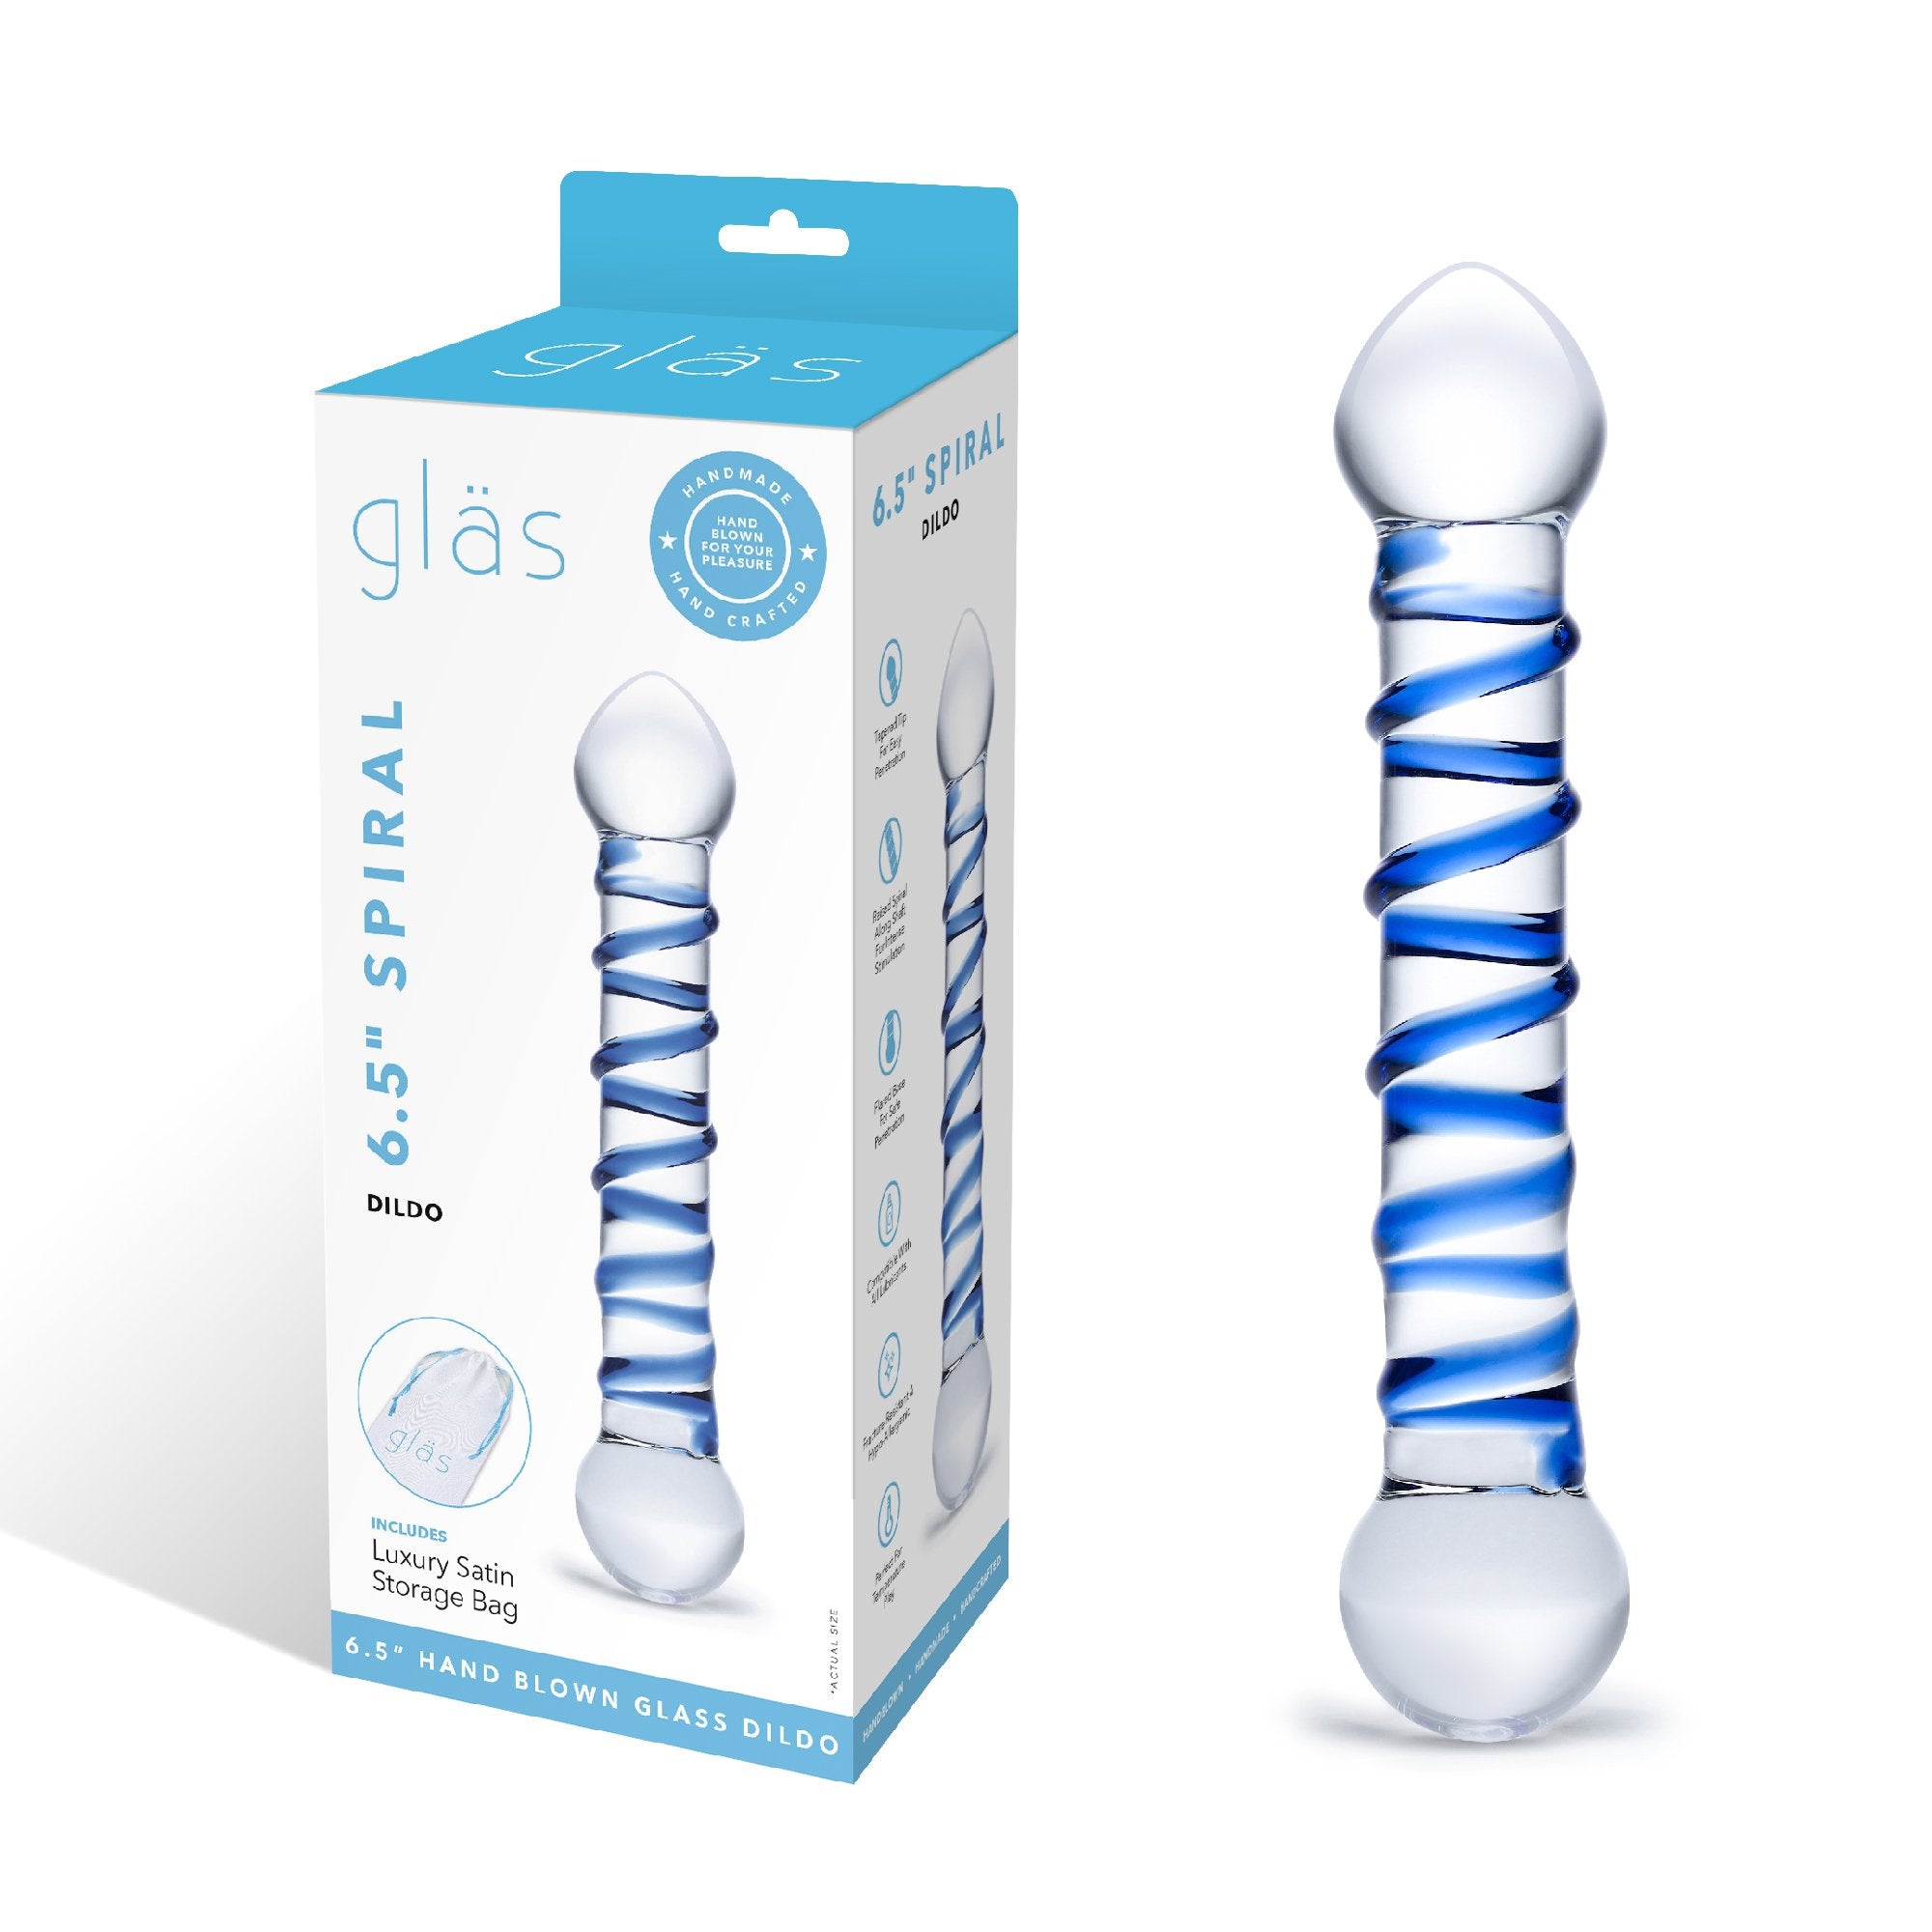 Packaging of the Gläs 6.5 inch Spiral Glass Dildo